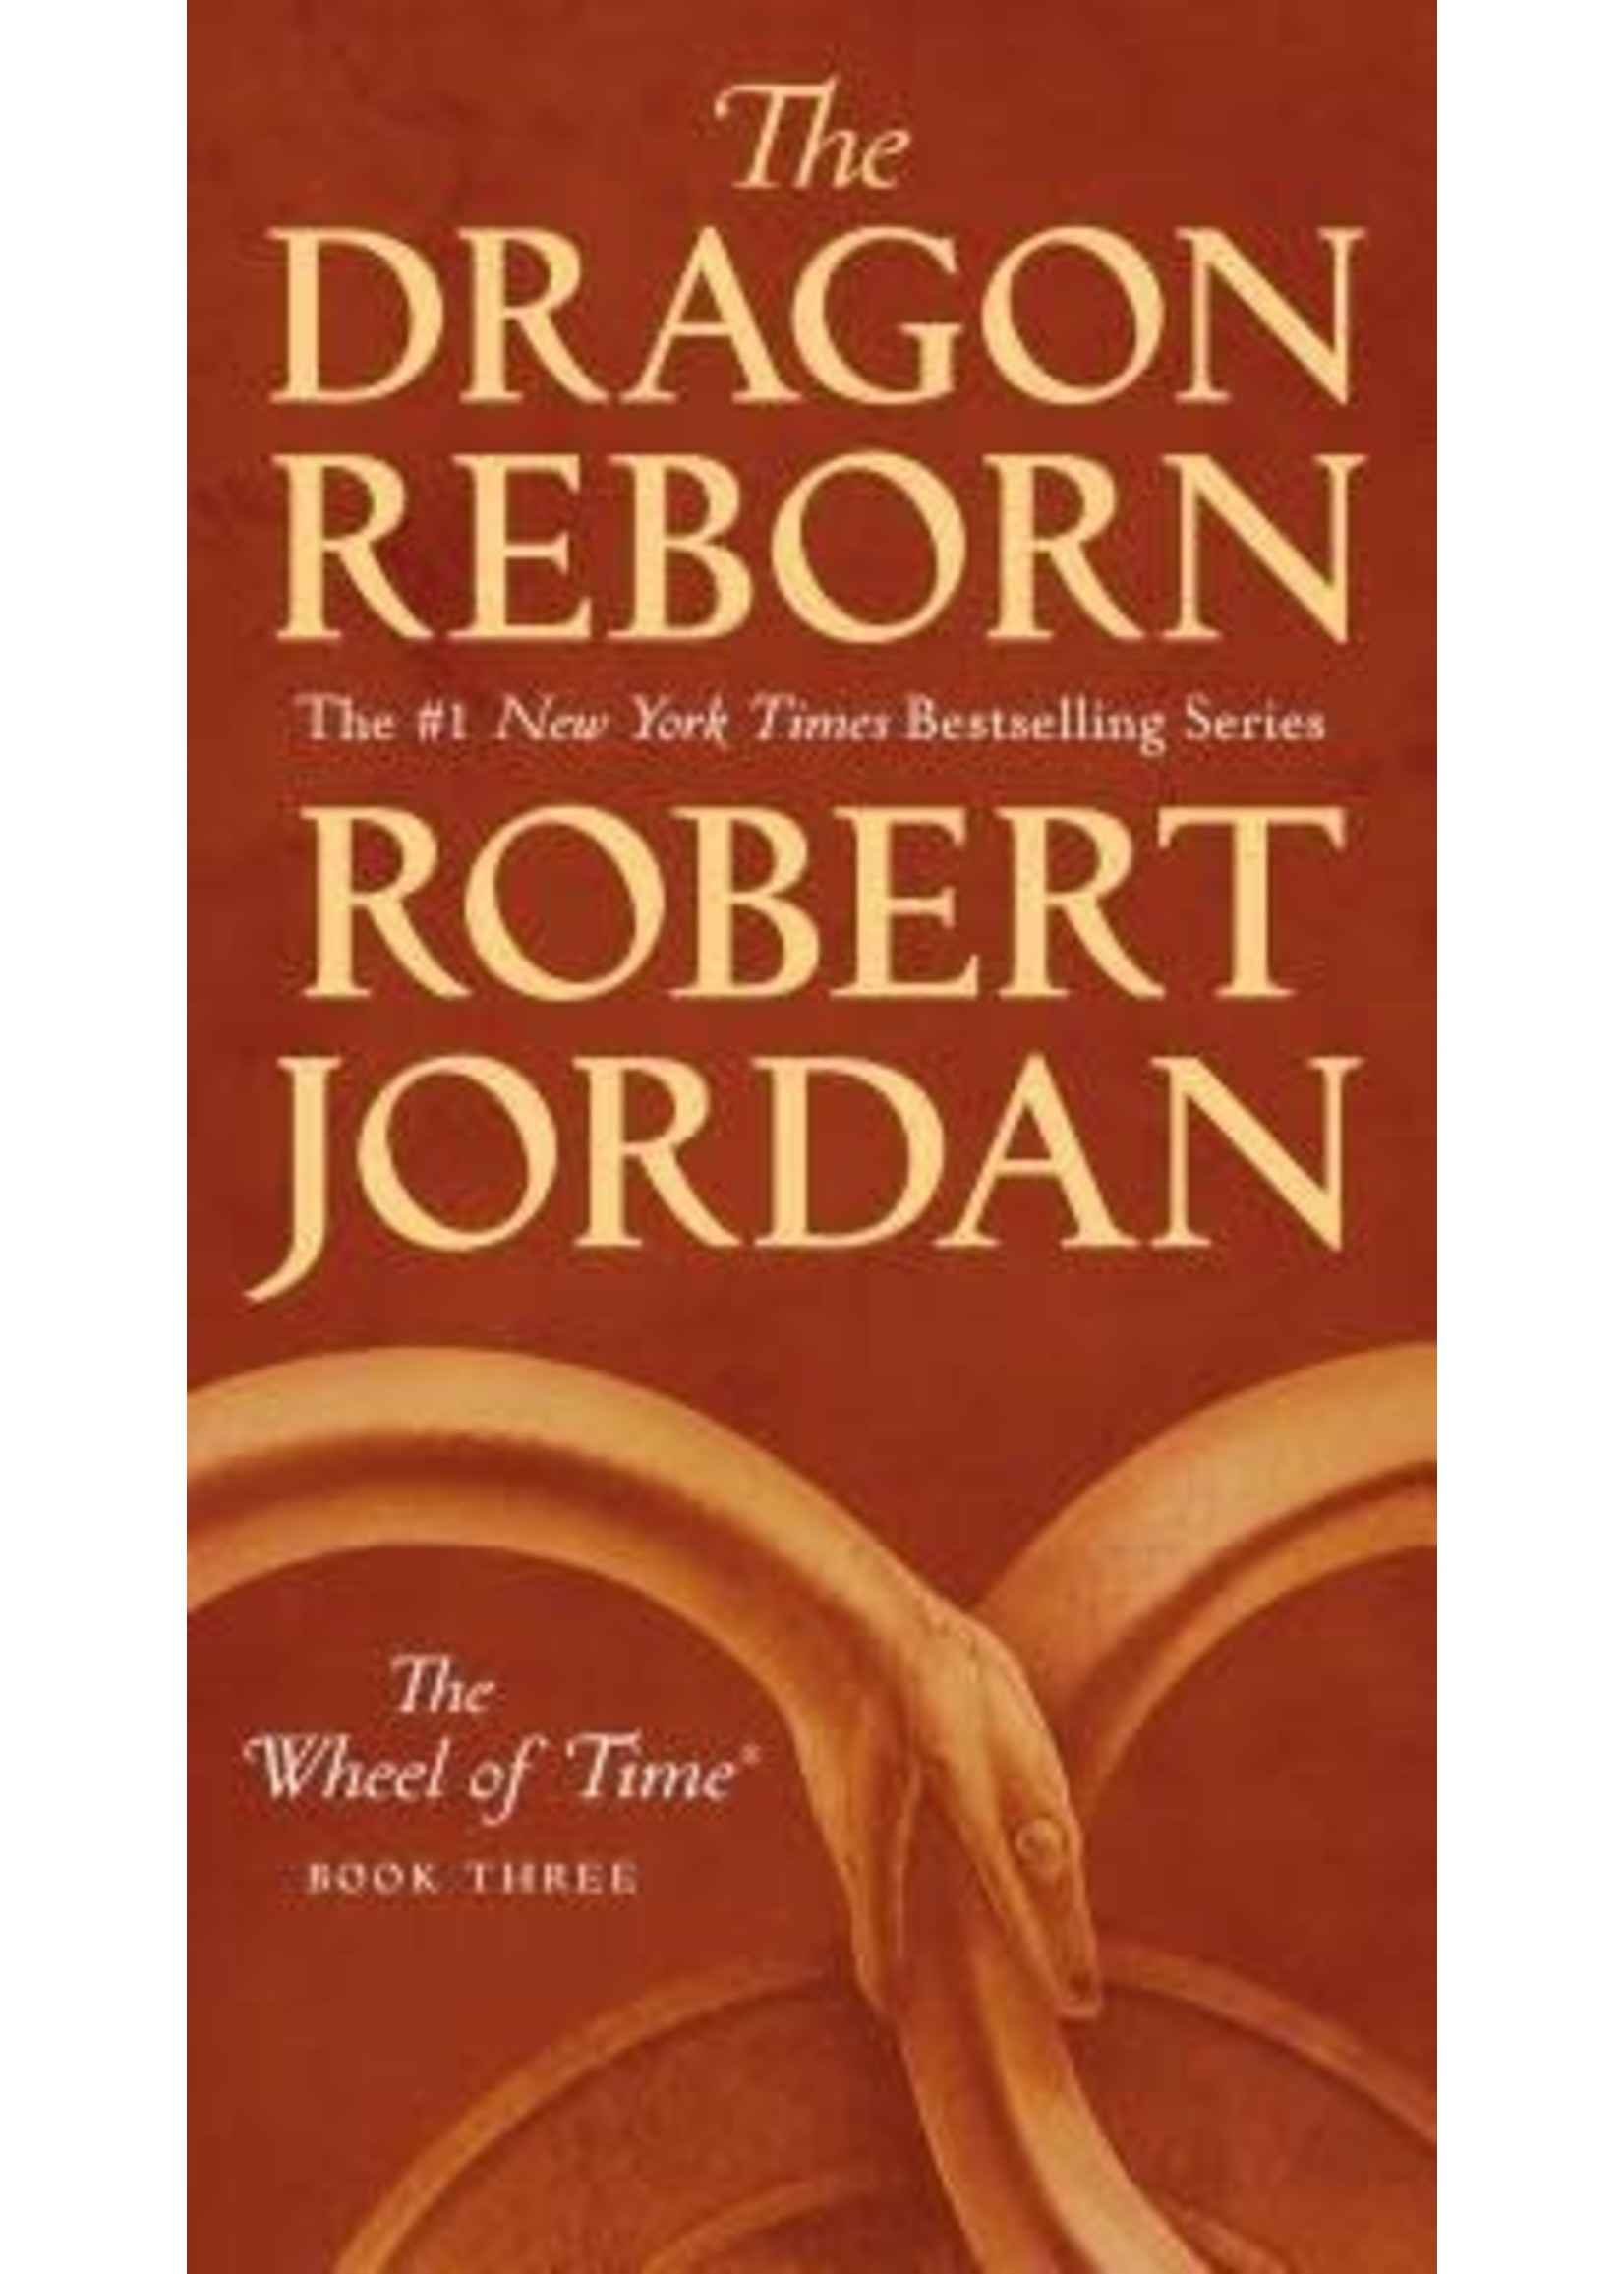 The Dragon Reborn (The Wheel of Time #3) by Robert Jordan